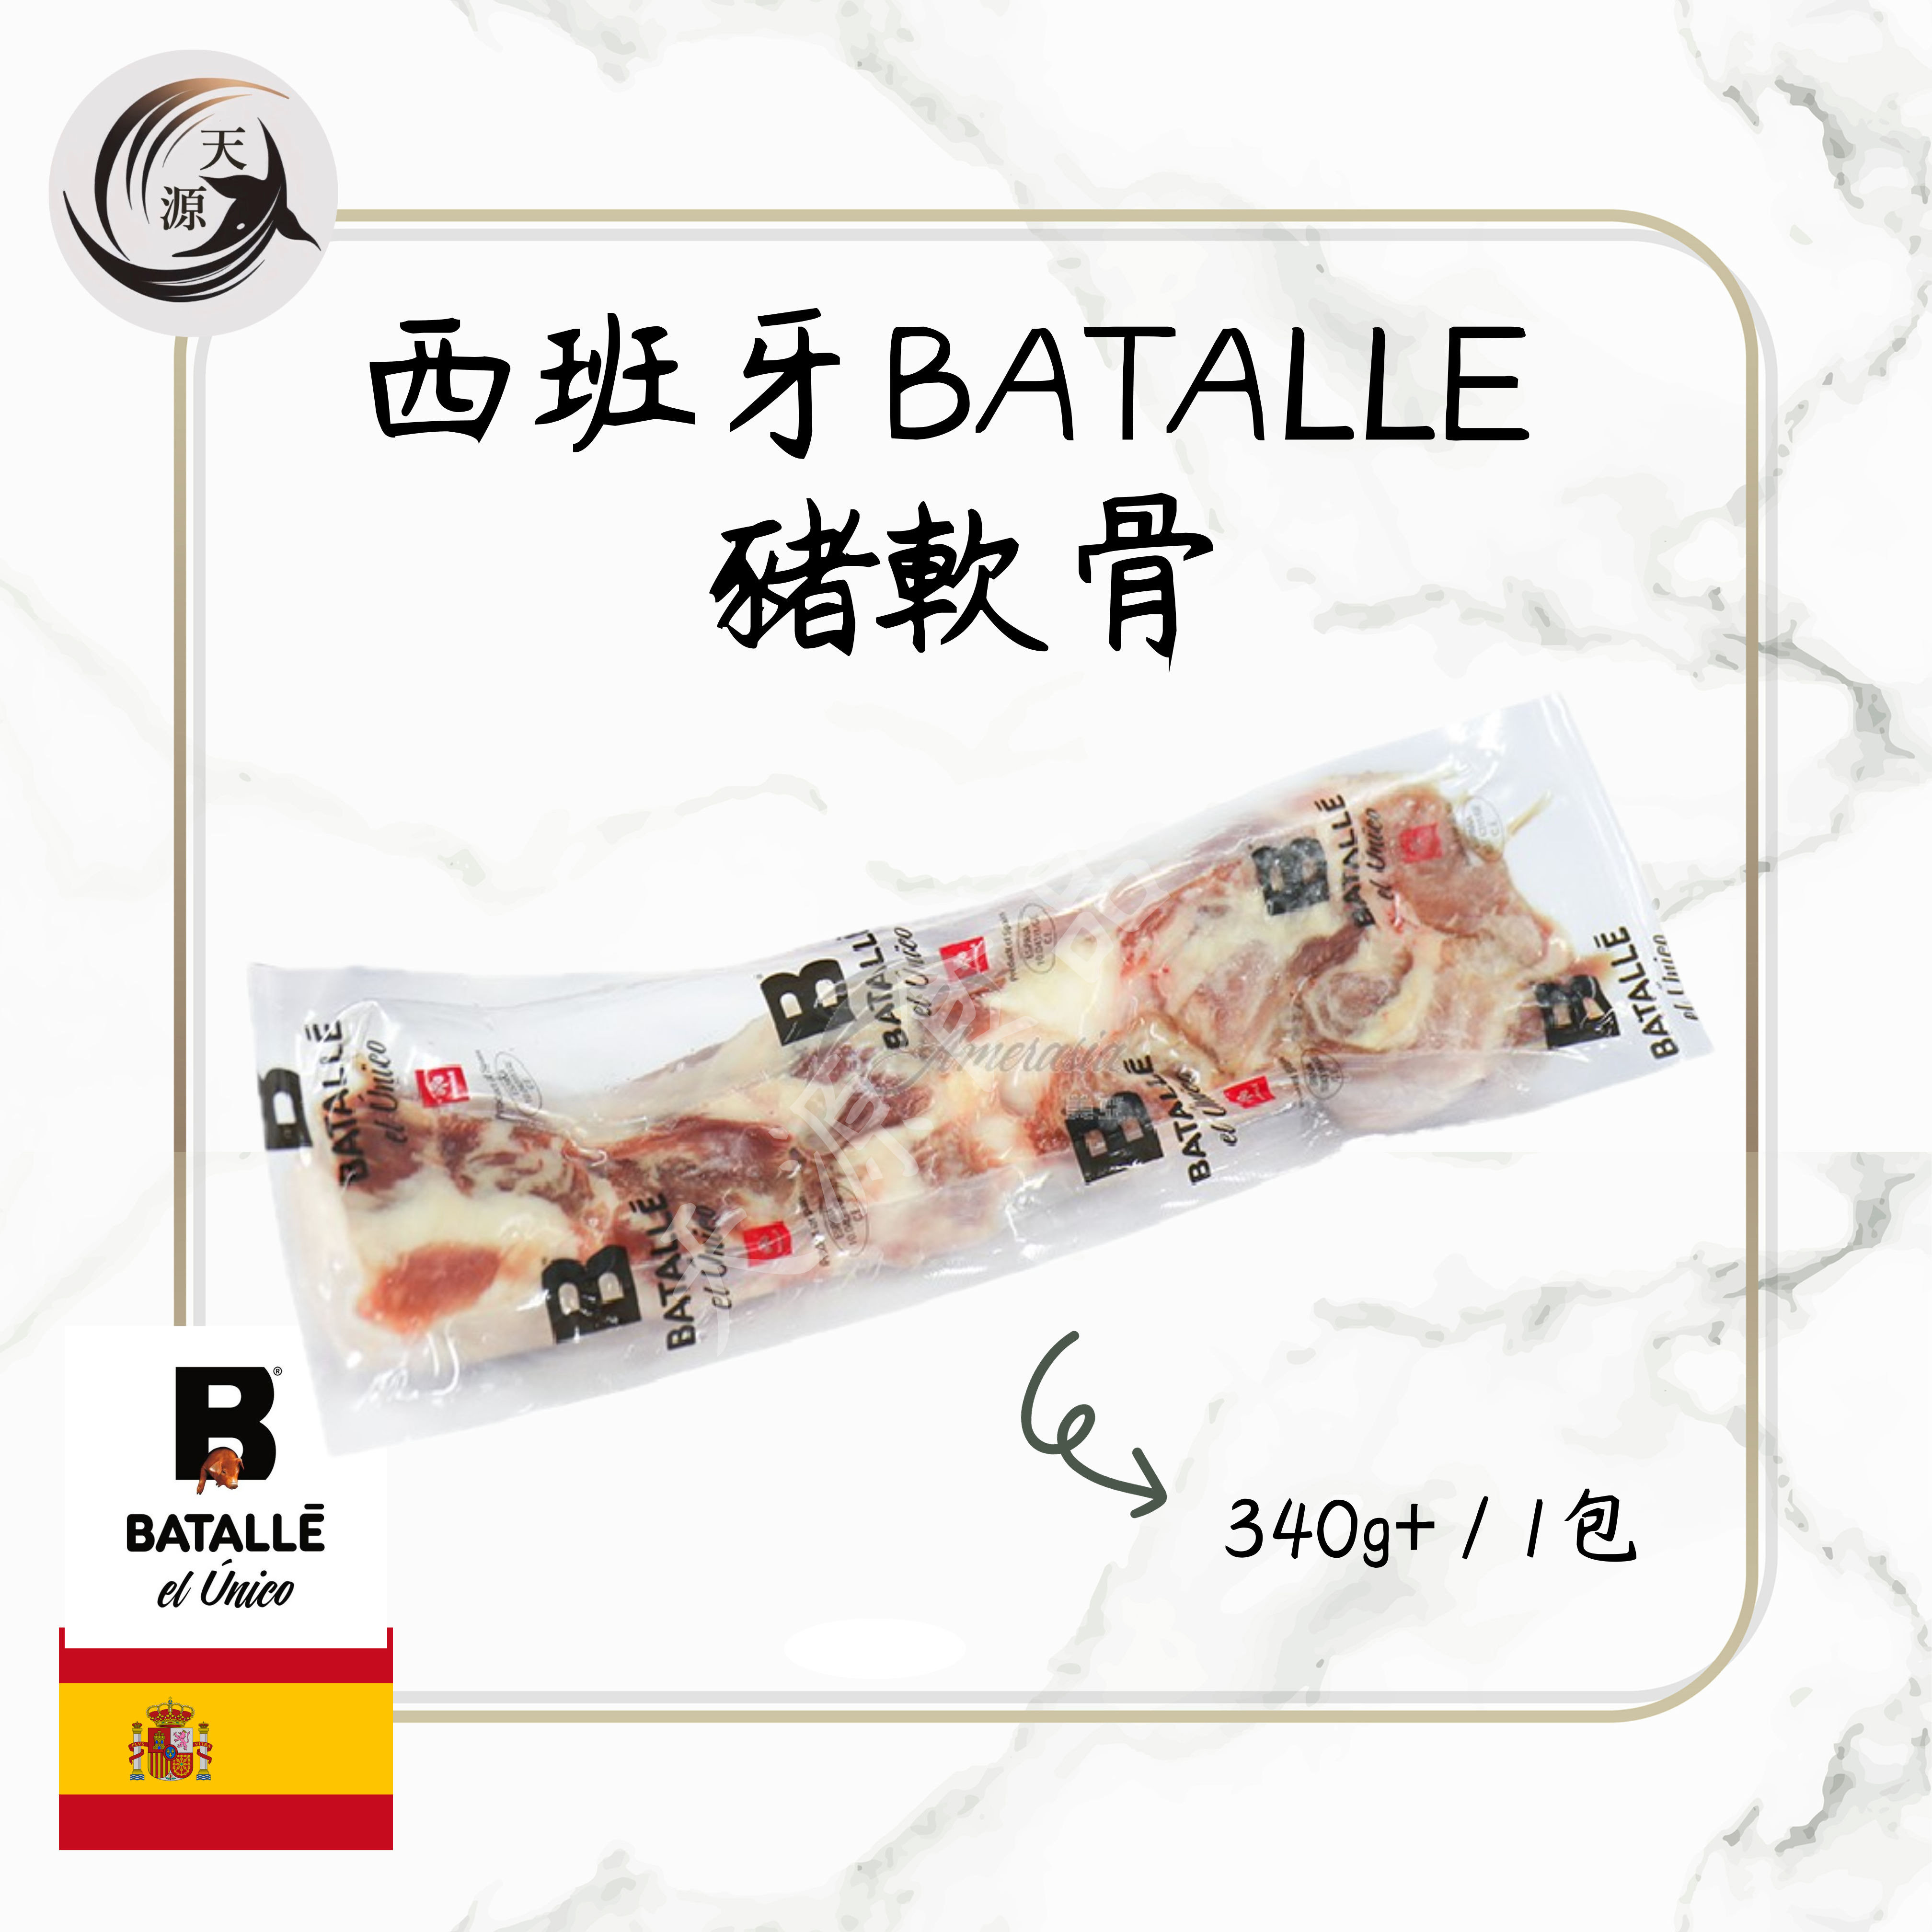 Spanish BATALLE Pork Cartilage